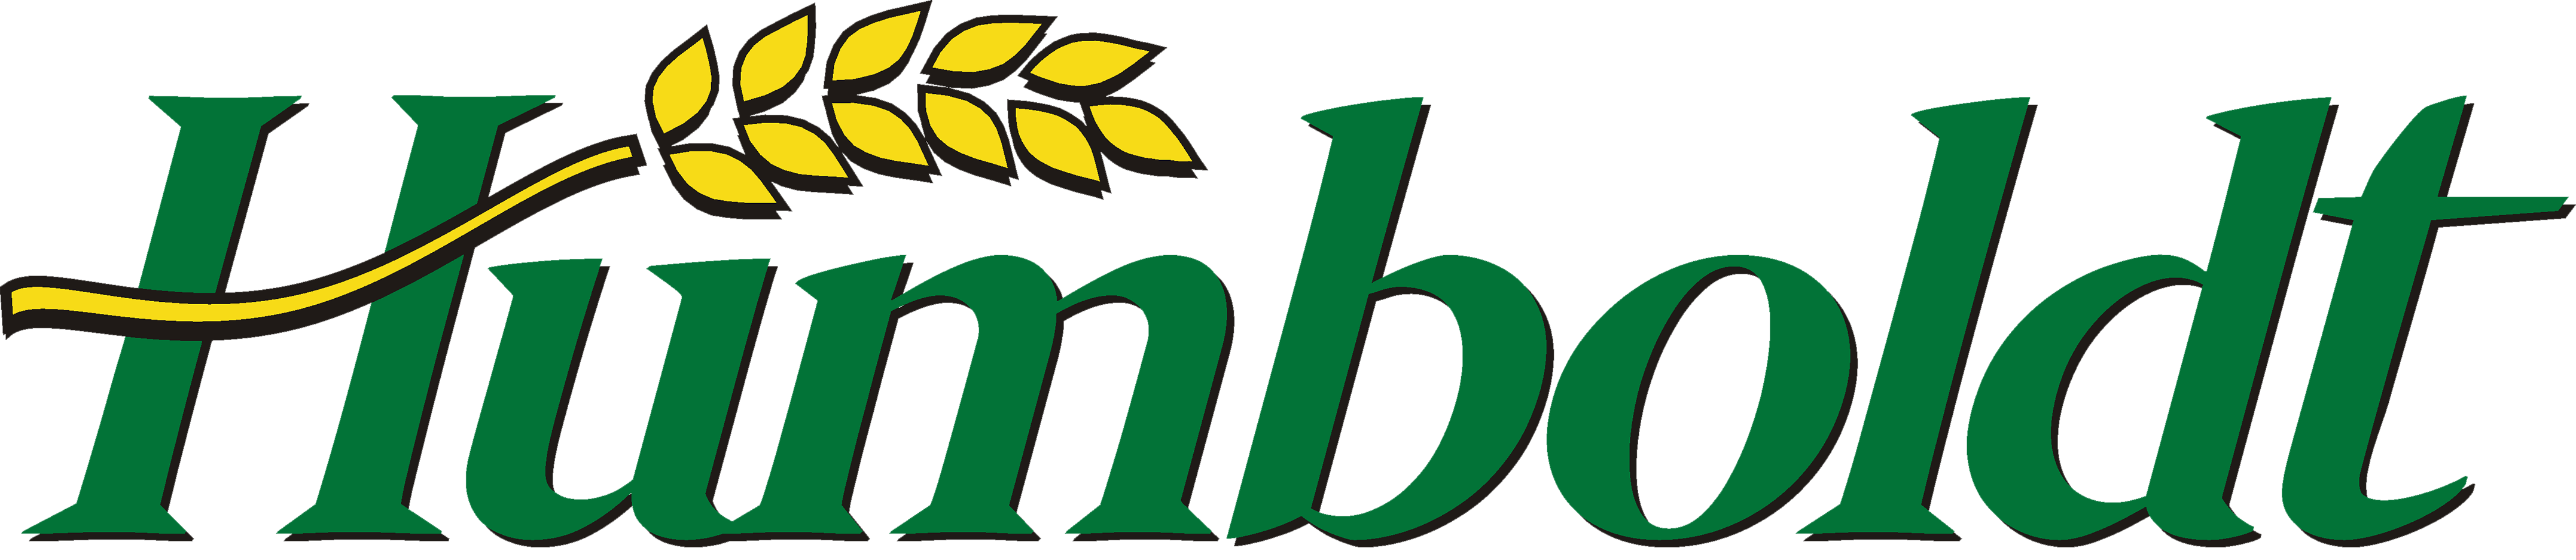 City of Humboldt Logo_transparent